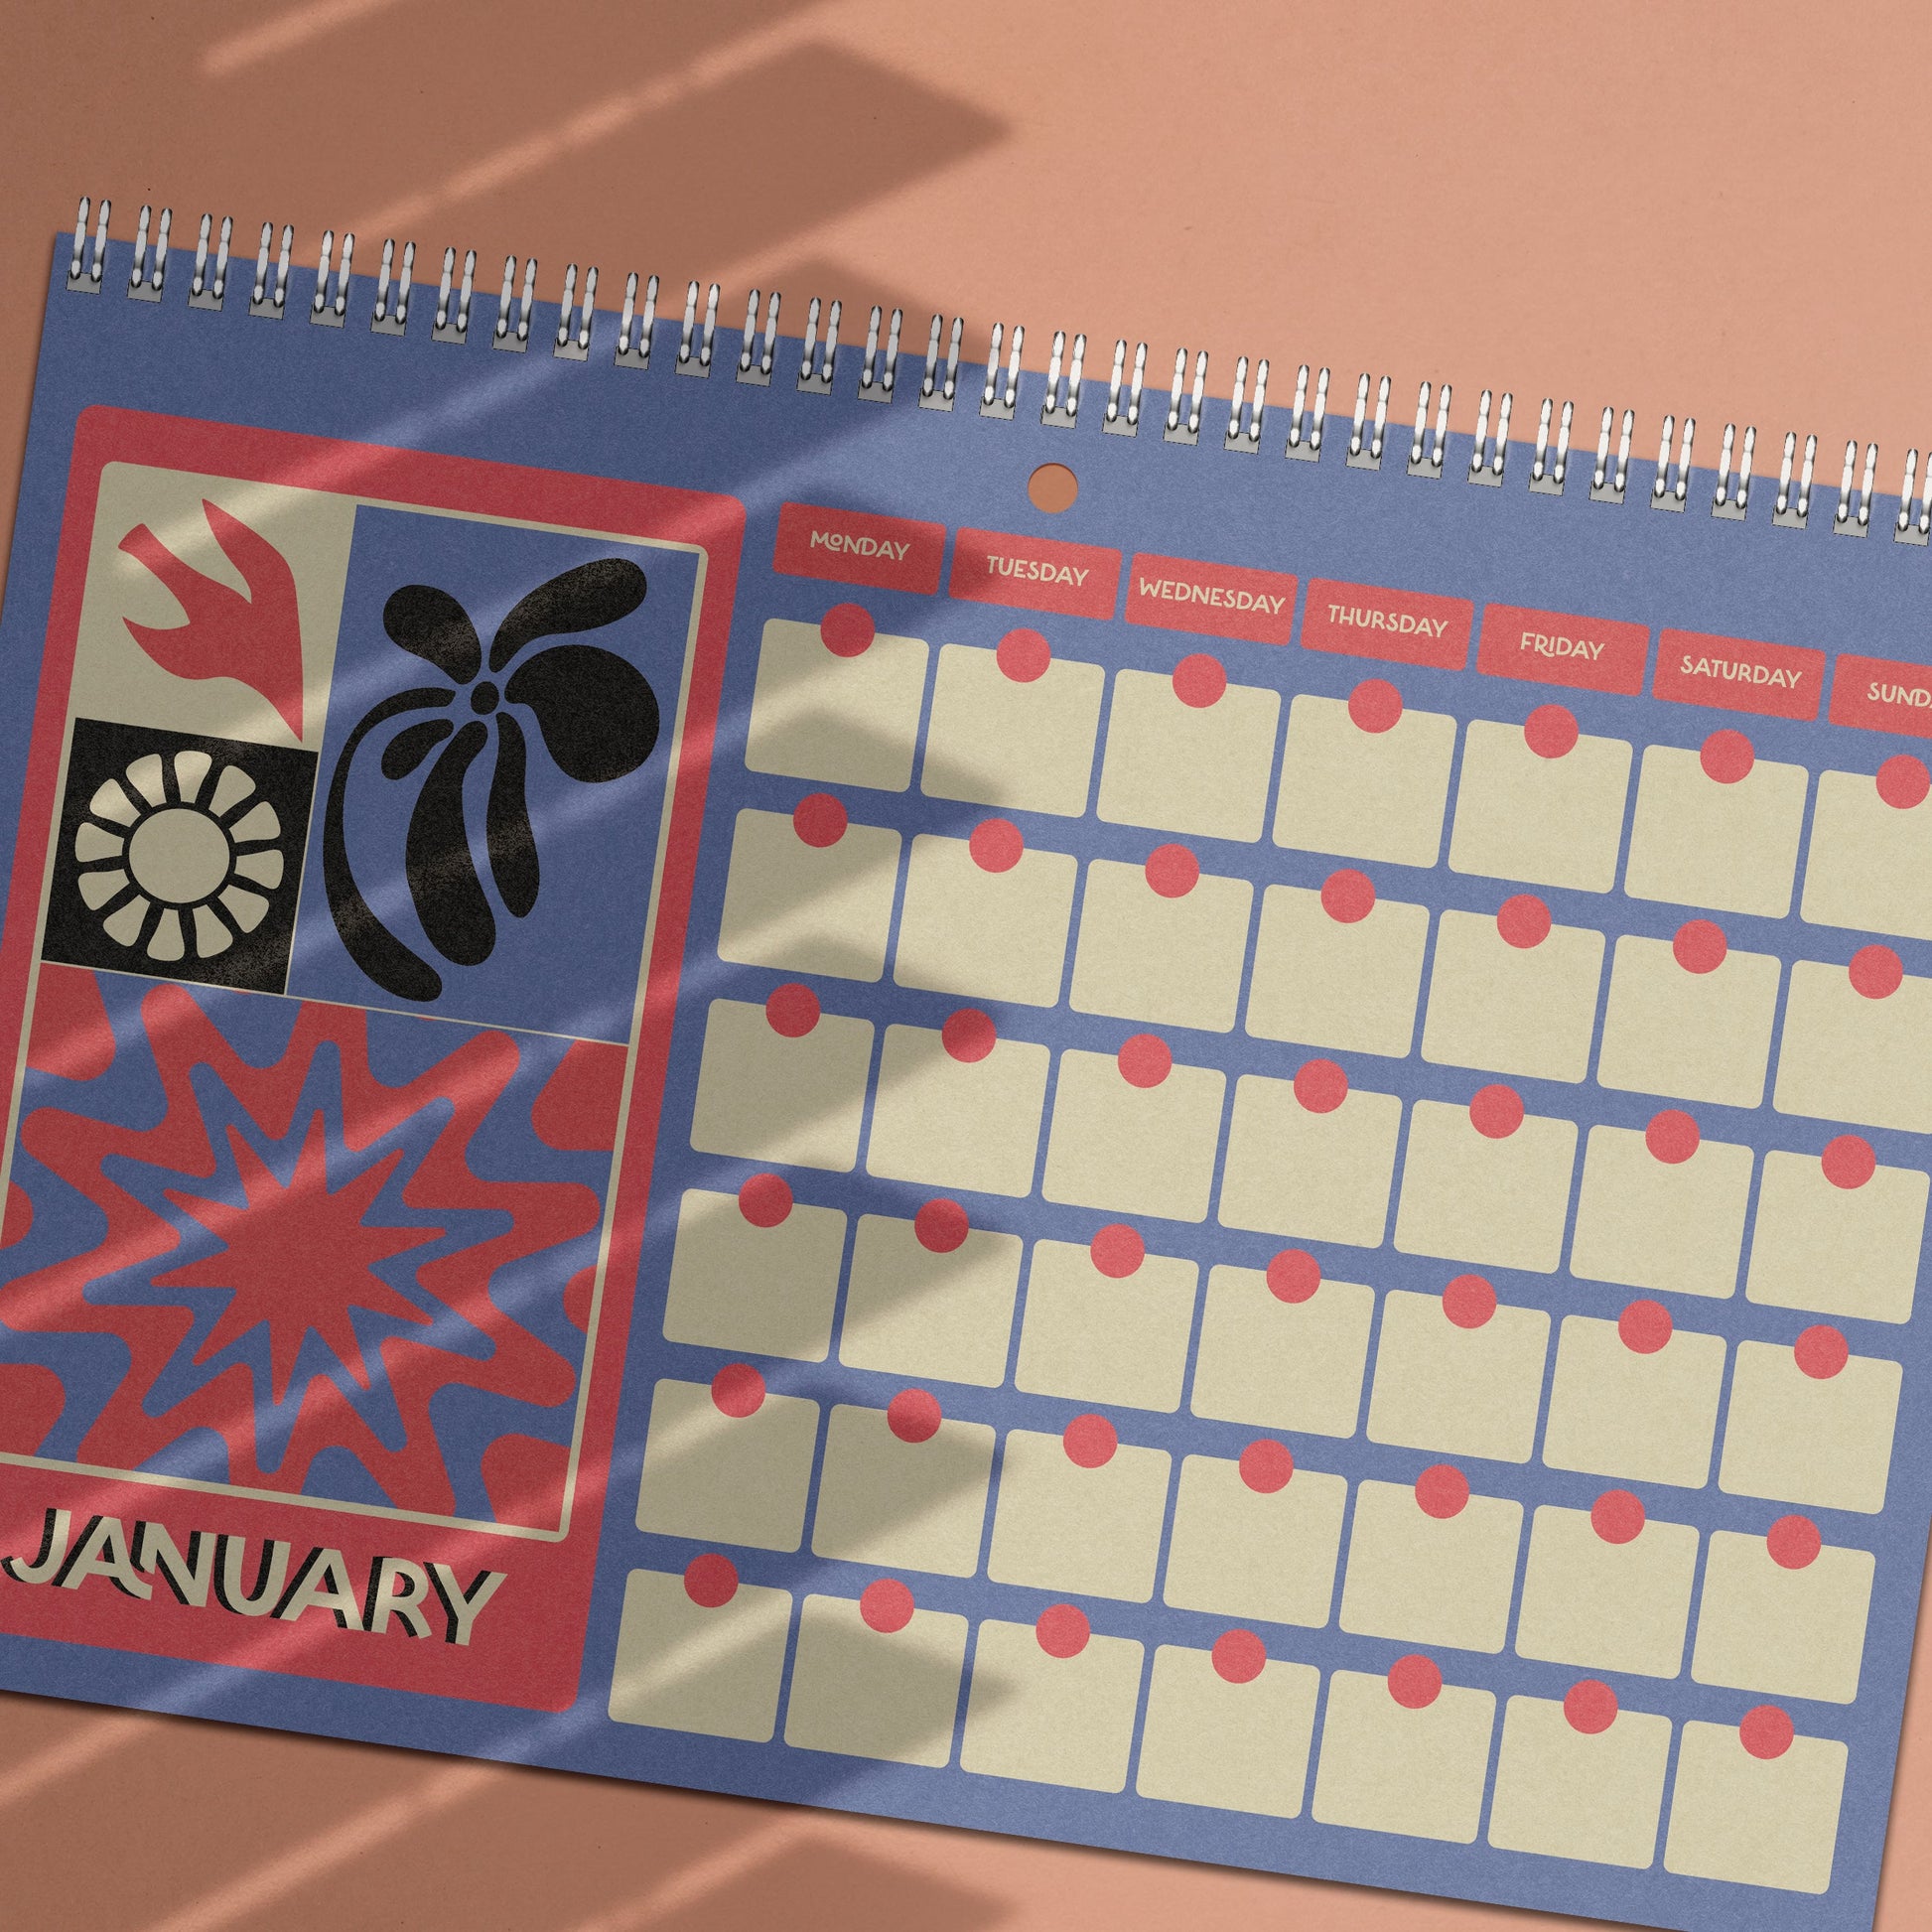 Undated Monthly Calendar | Wall Planner | Matisse Inspired | A4 Landscape | 12 month wirebound hanging calendar-1